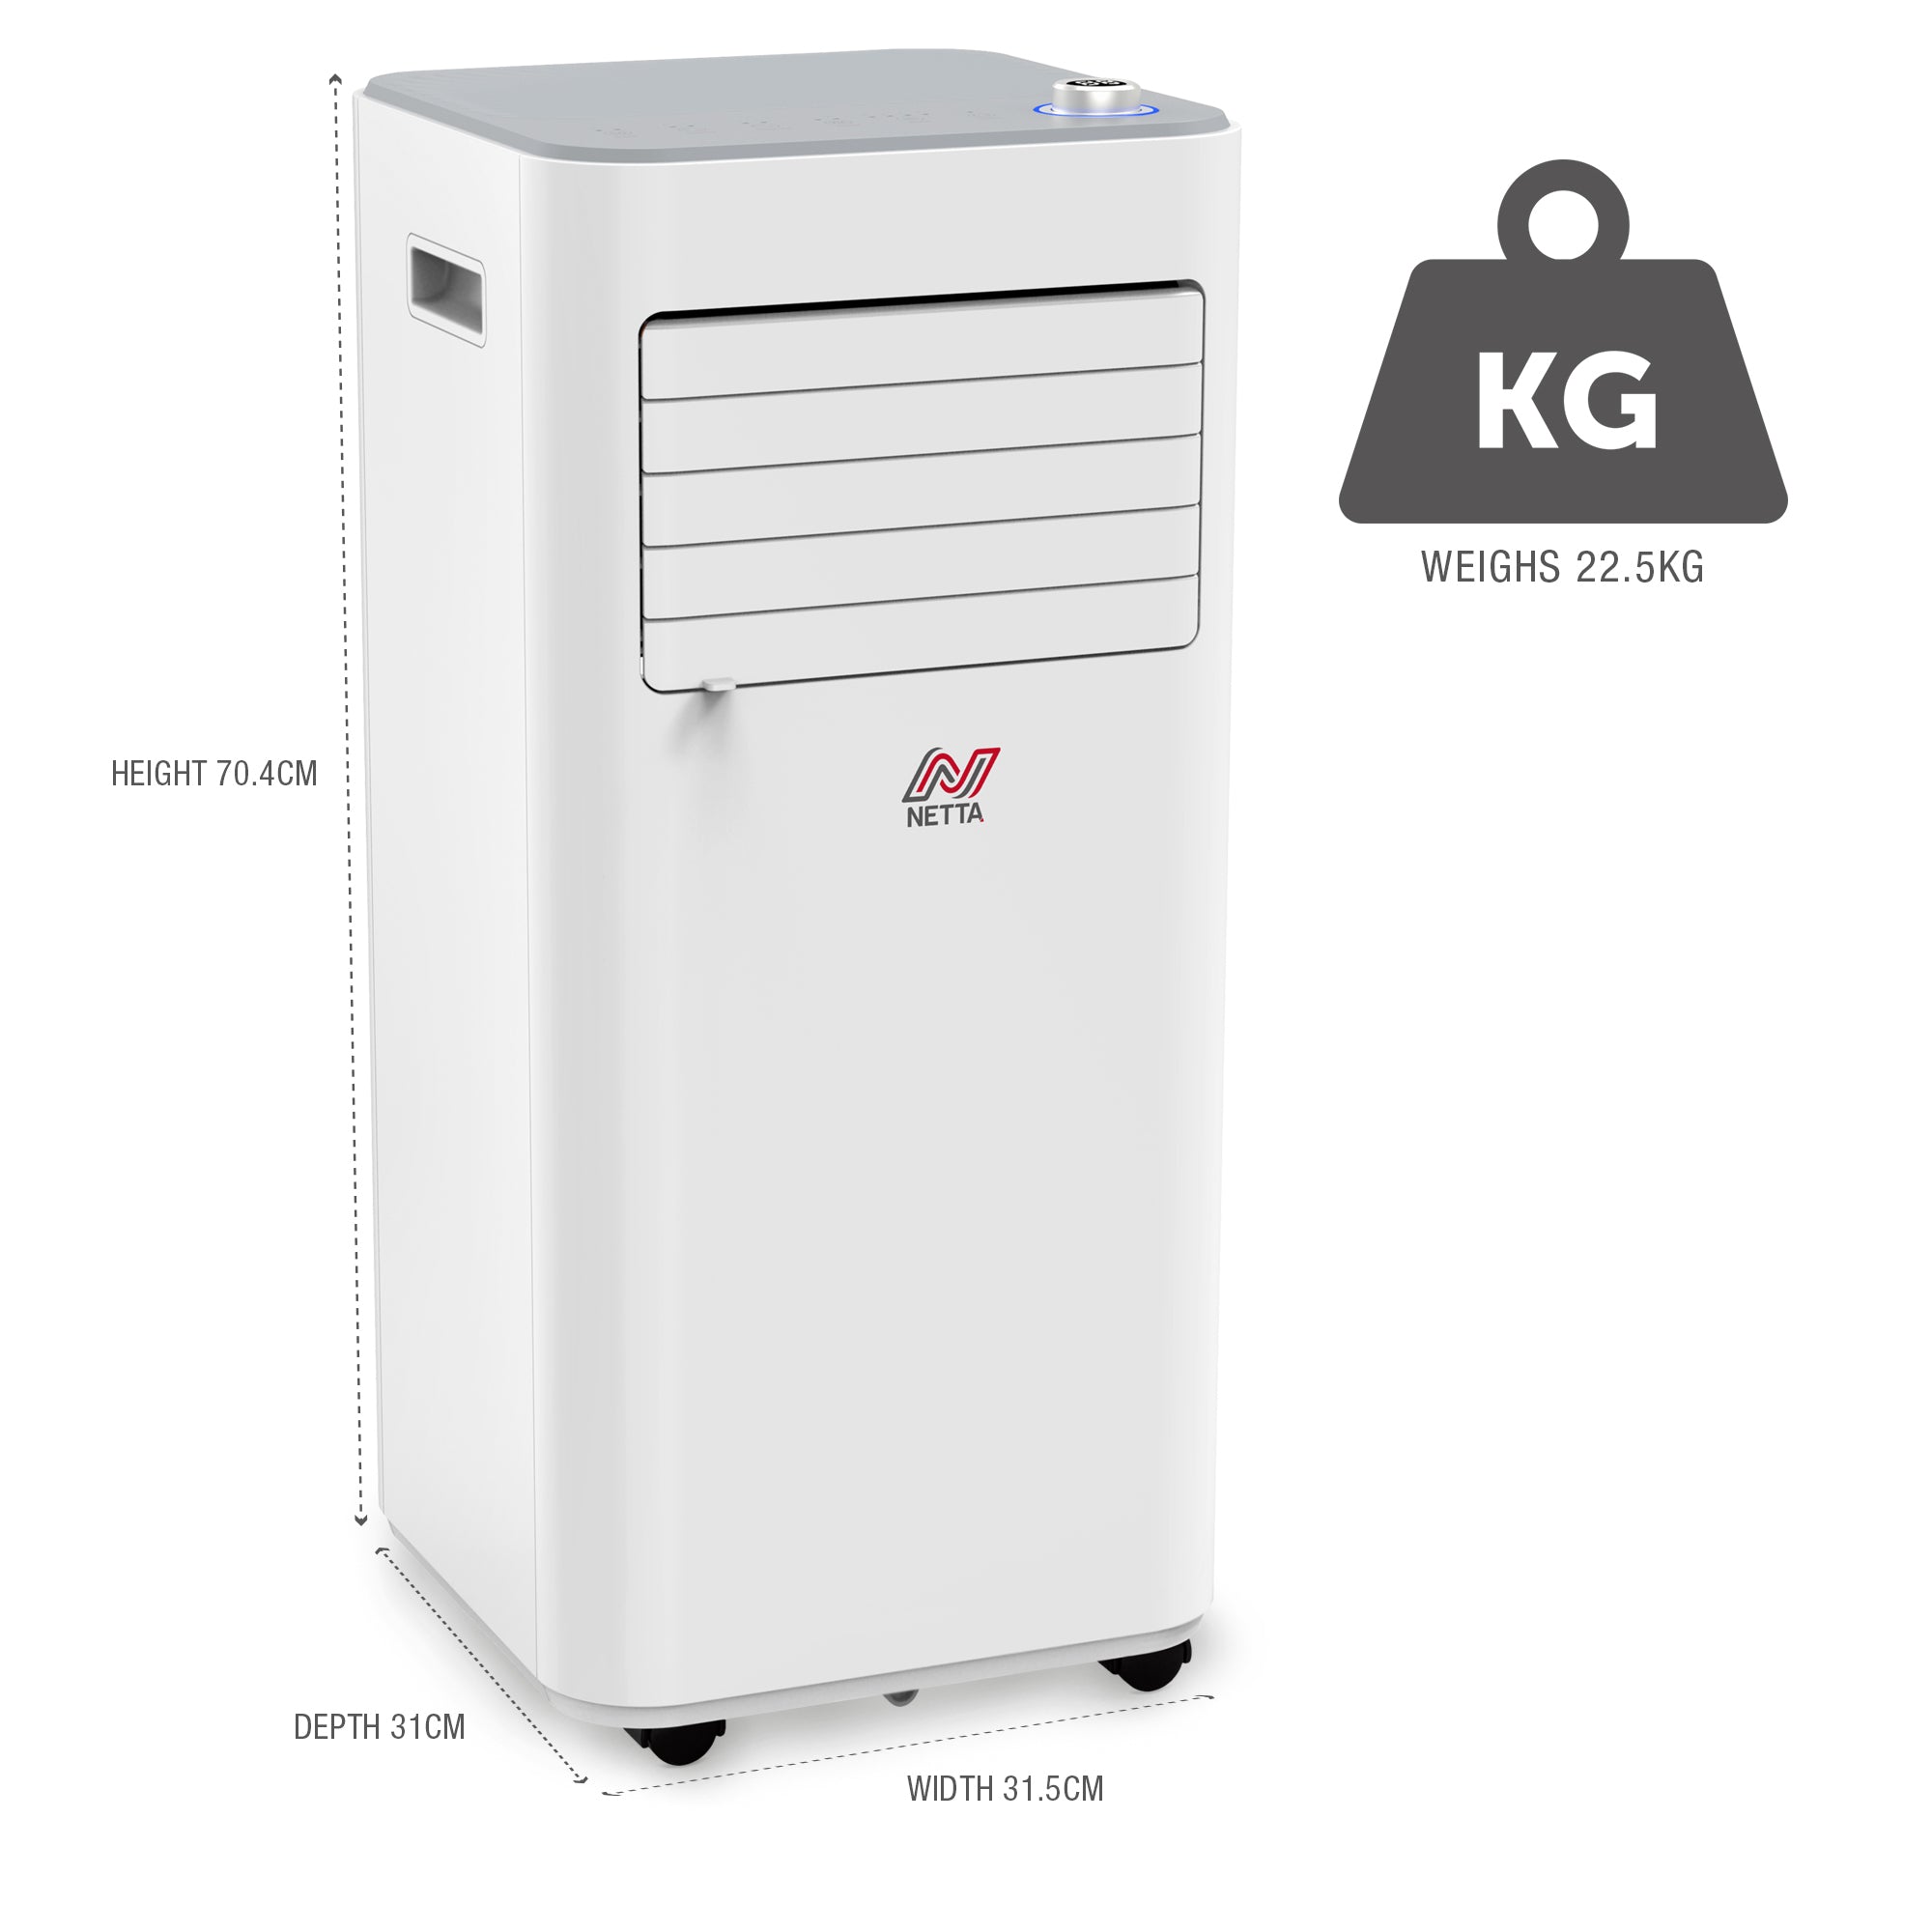 NETTA 9000BTU 3-in-1 Portable Air Conditioner